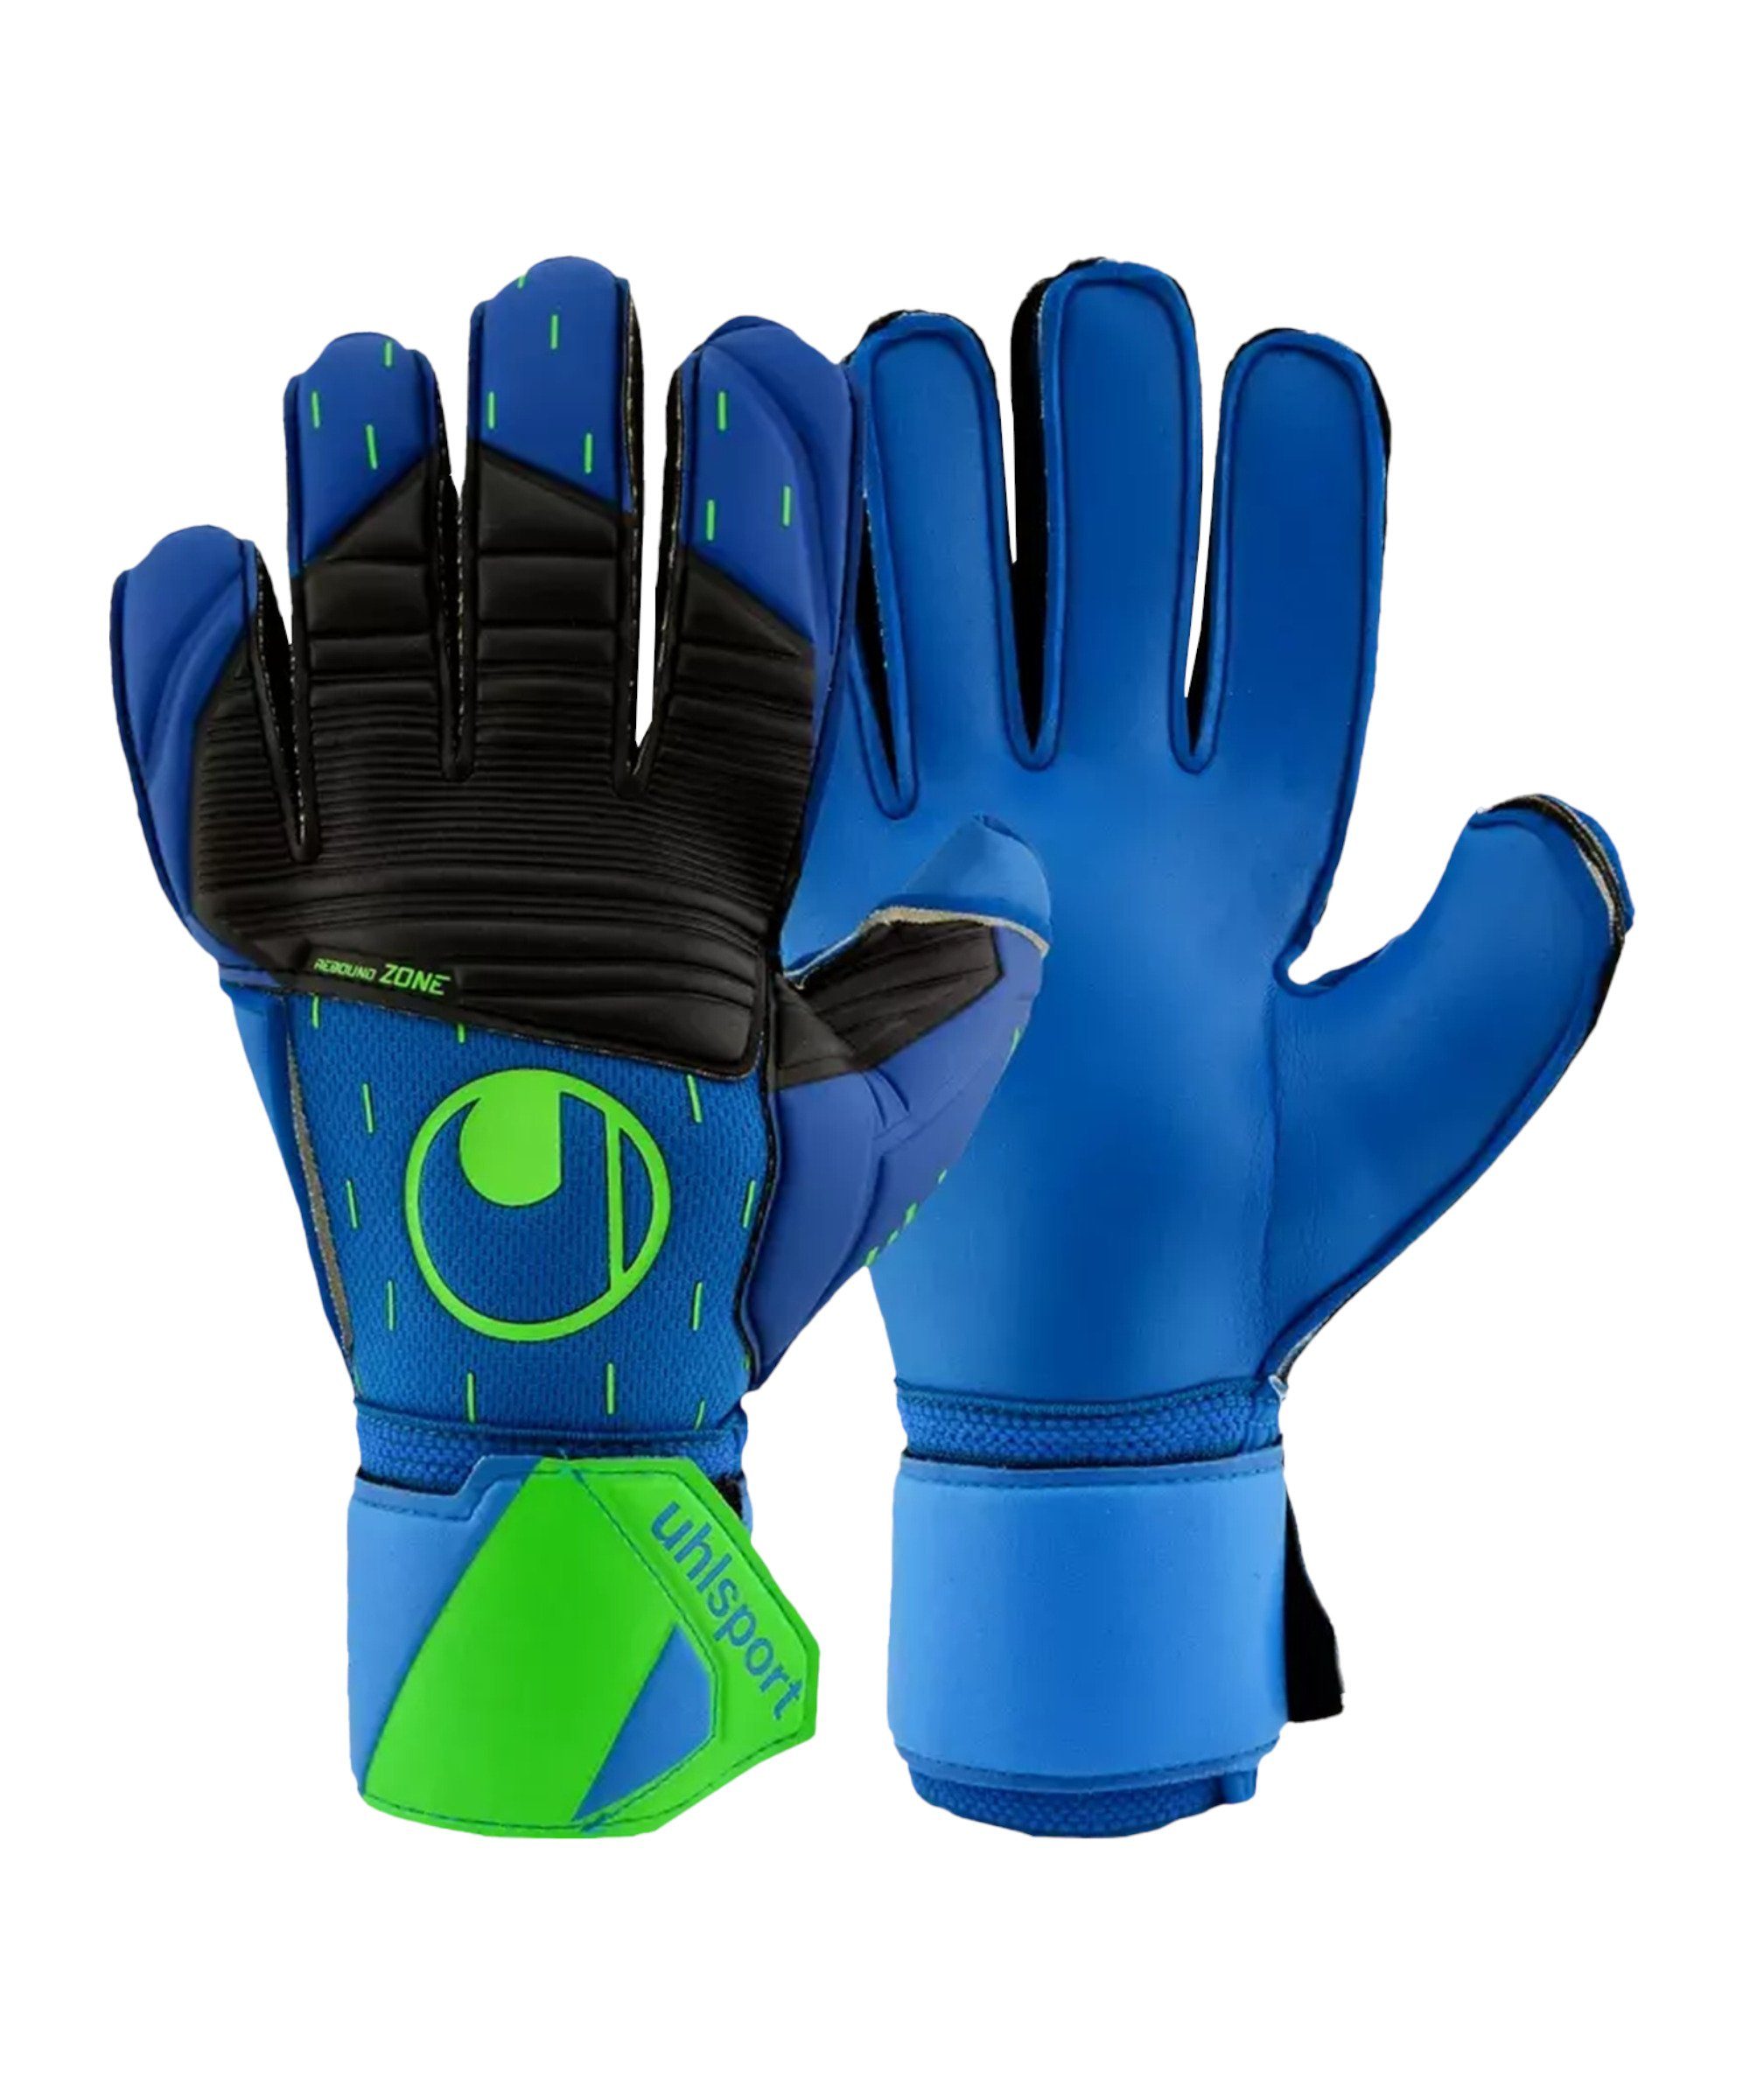 Torwarthandschuhe TW-Handschuhe uhlsport Aquasoft